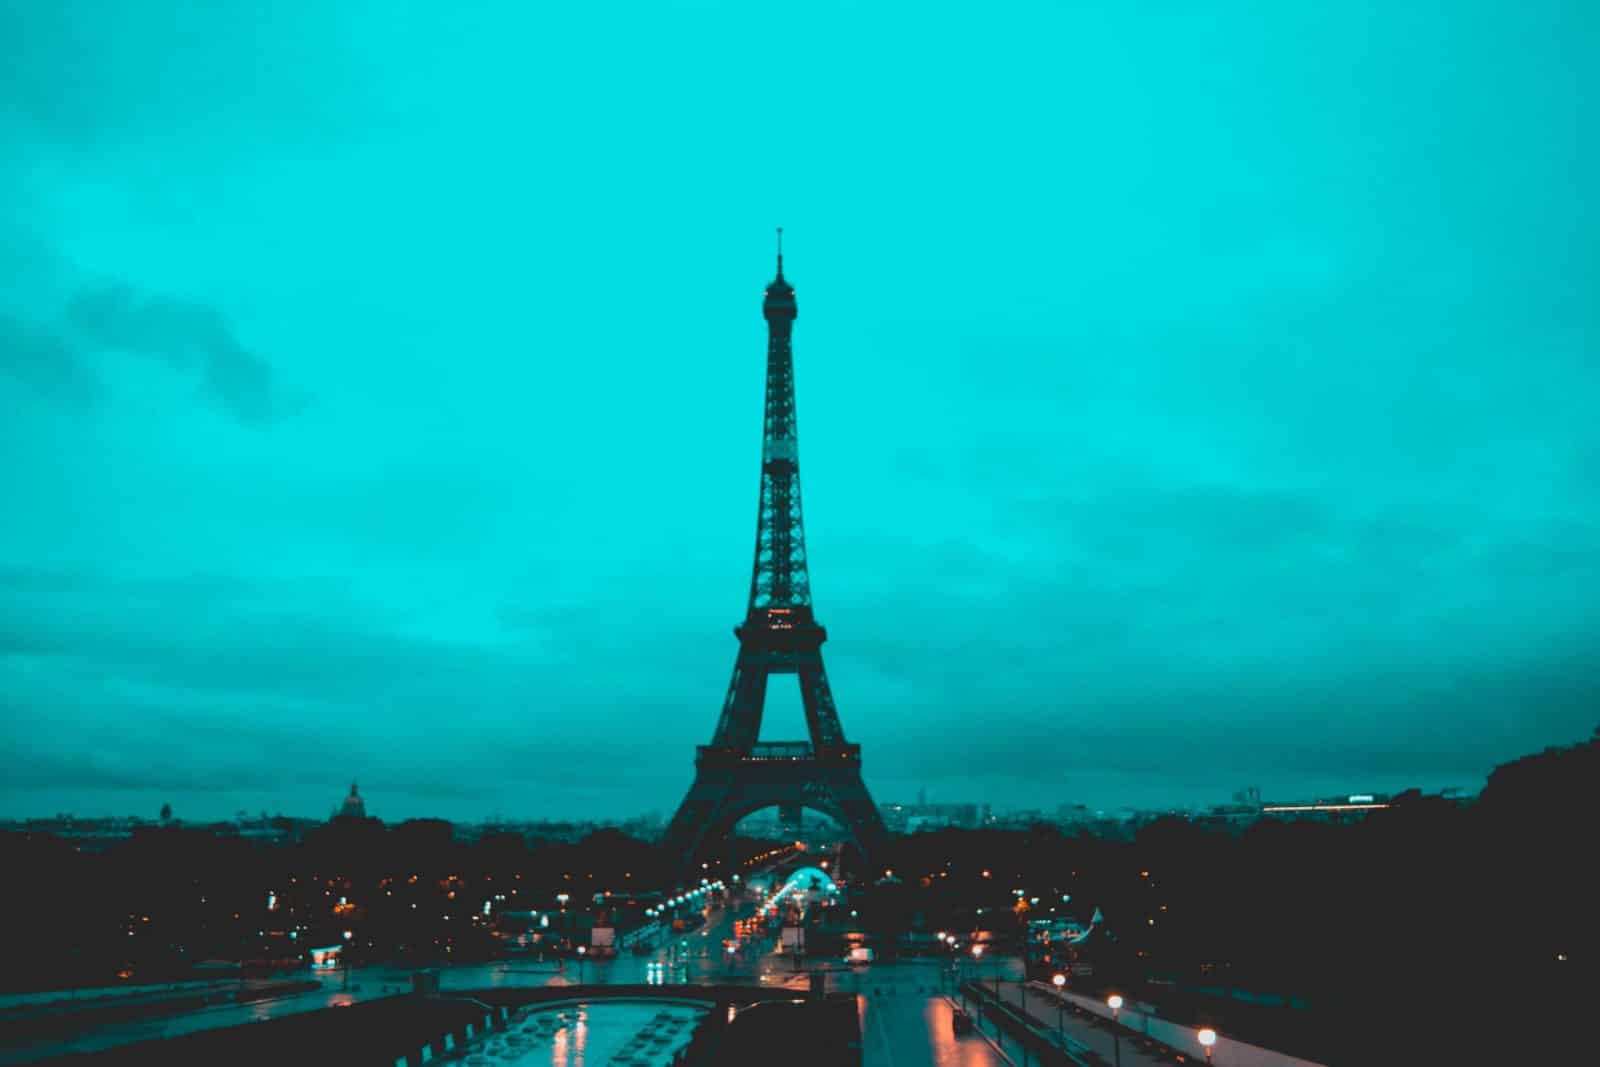 Eiffel Tower, Paris from Trocadero